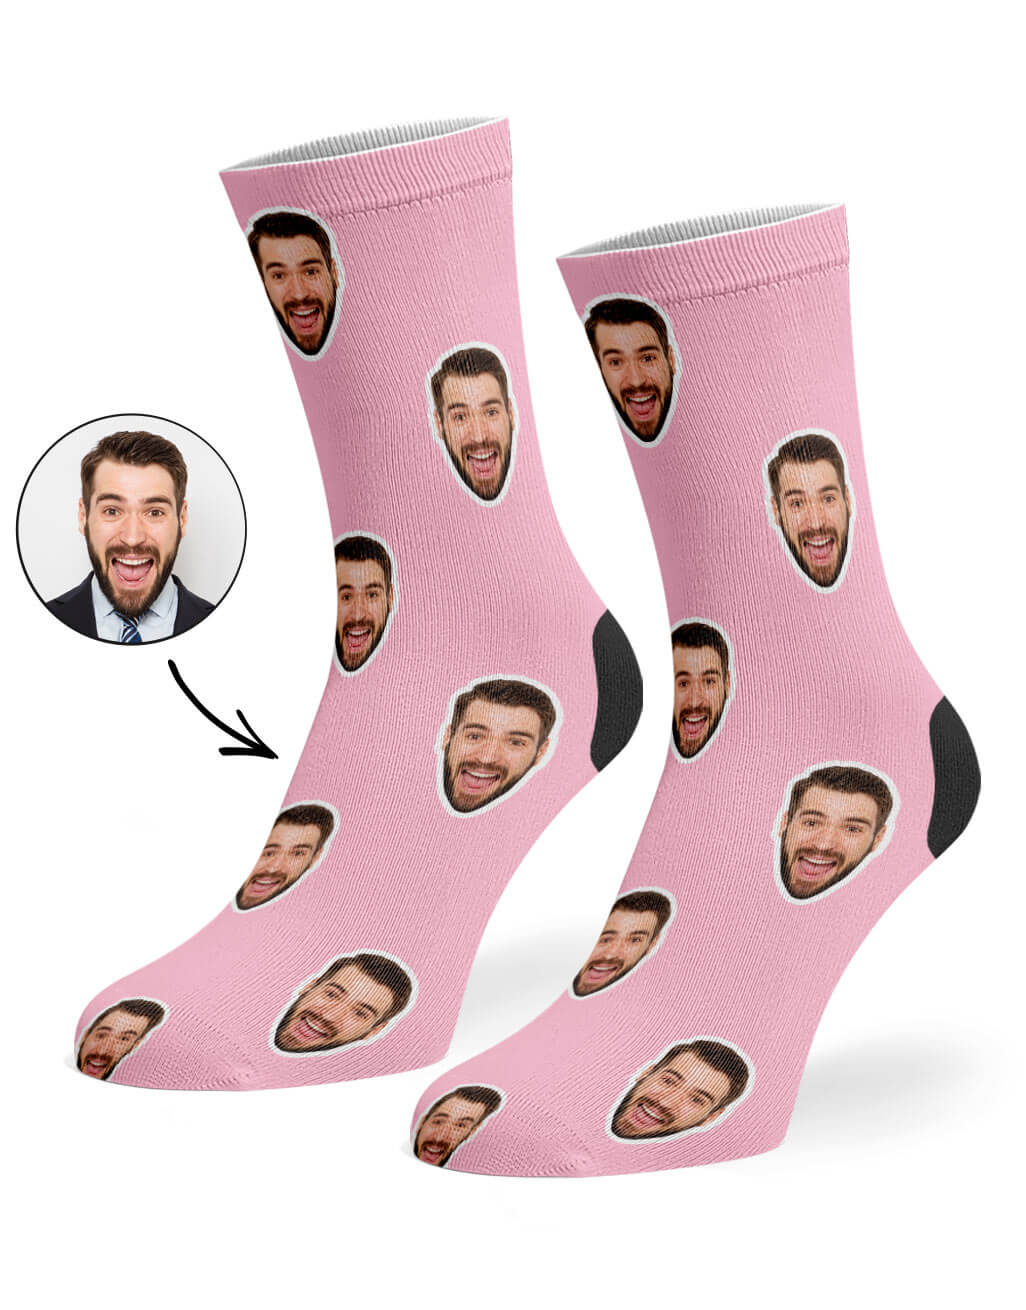 custom socks featuring your face